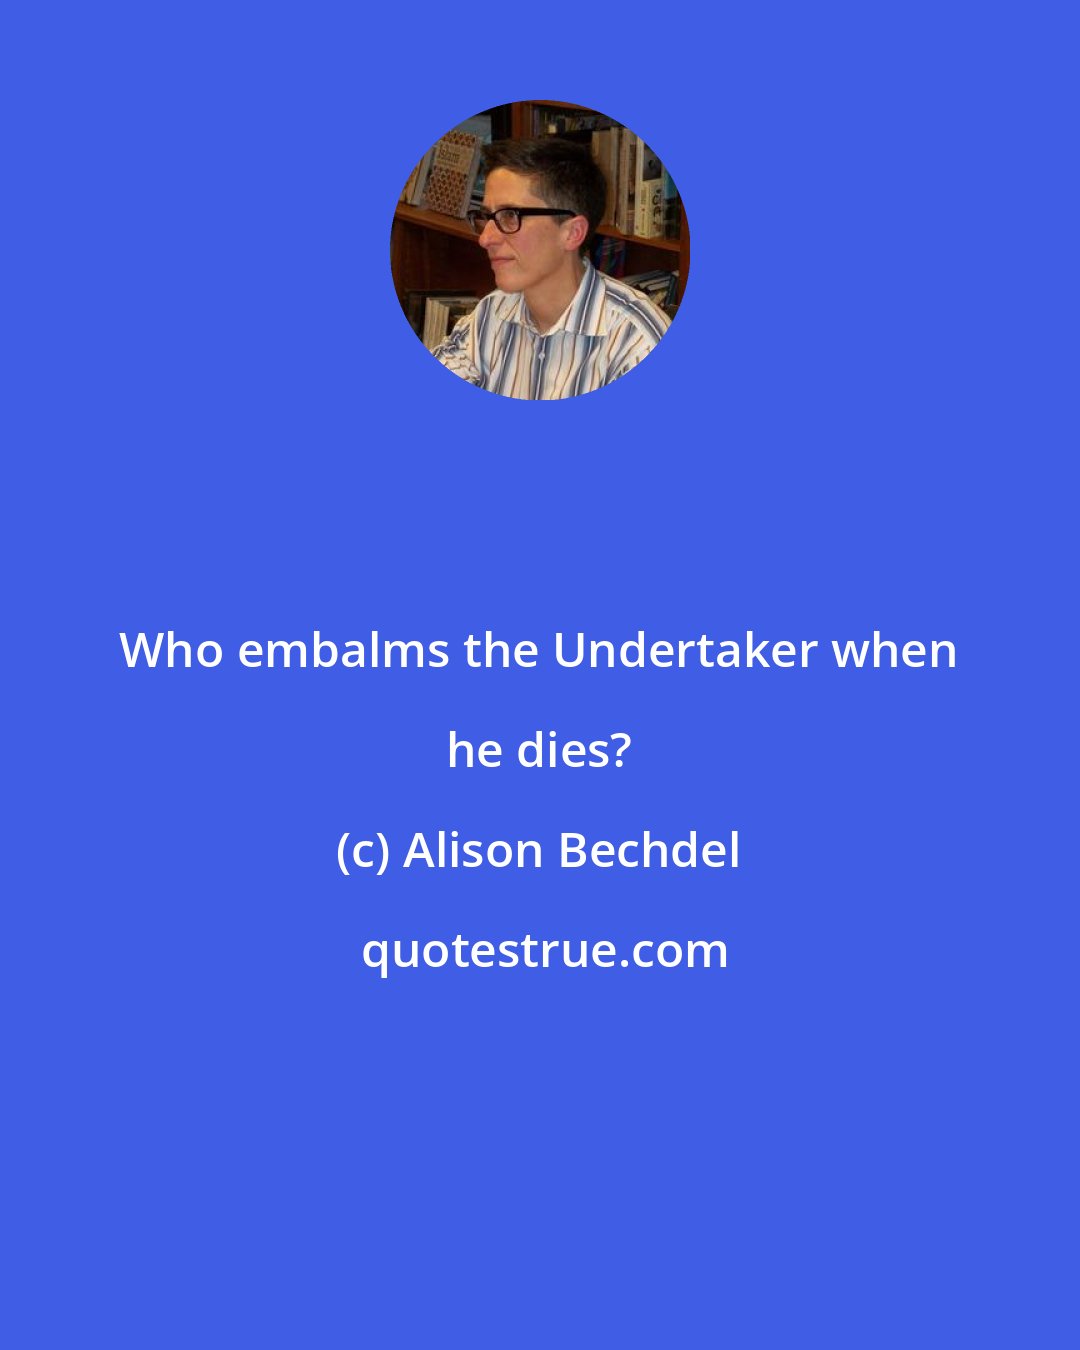 Alison Bechdel: Who embalms the Undertaker when he dies?